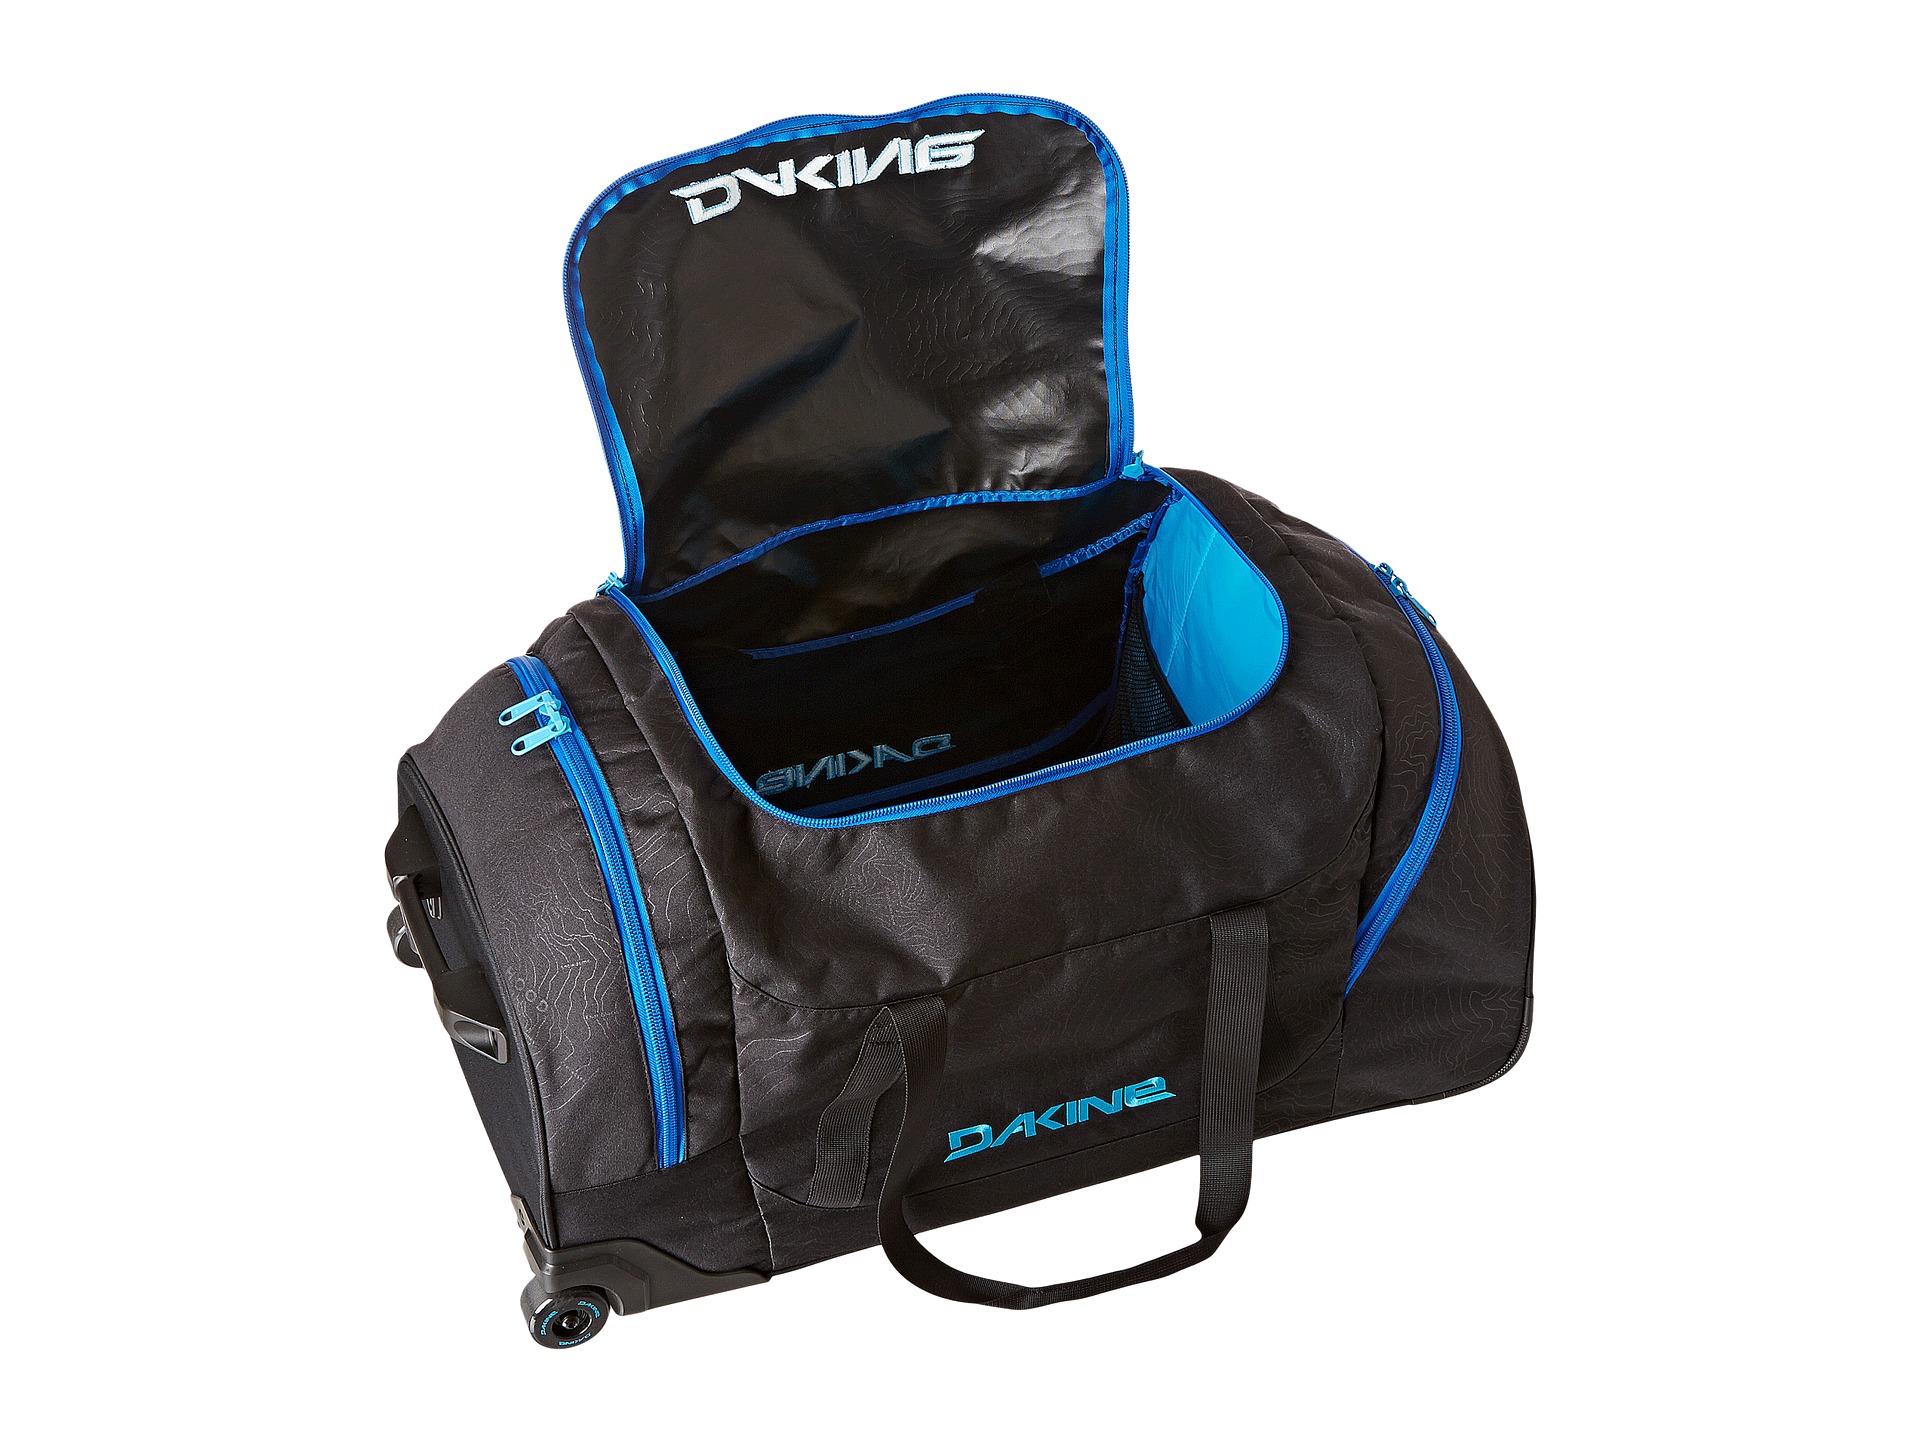 Dakine Wheeled Duffle 90l, Bags | Shipped Free at Zappos